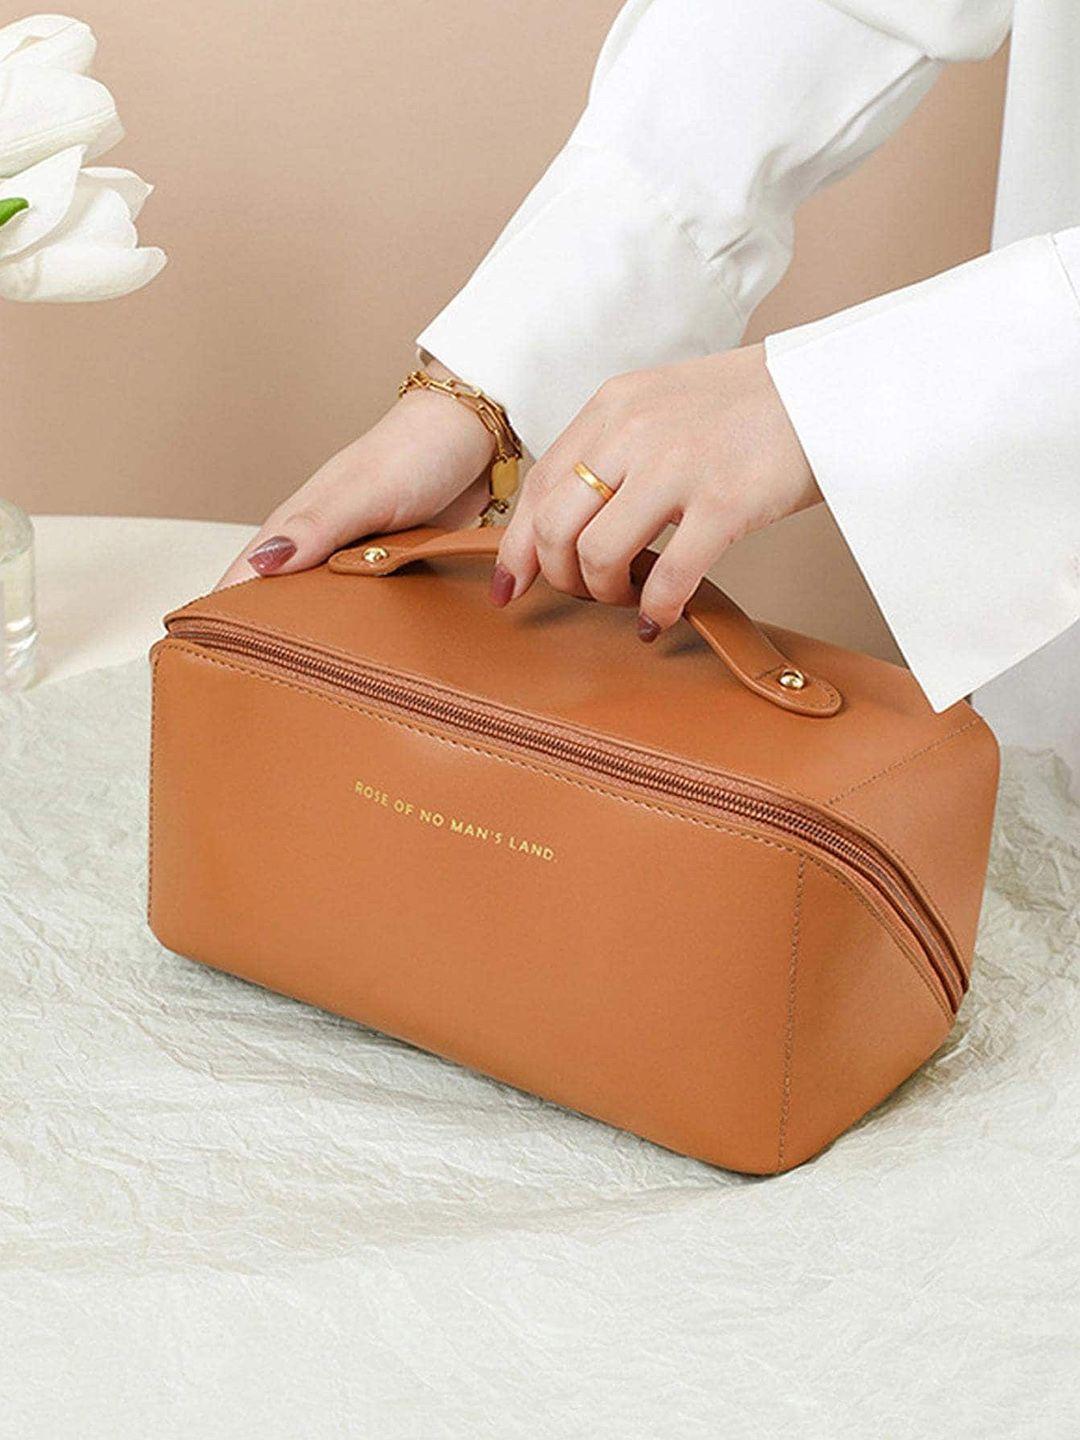 awestuffs luxury cosmetic travel bag